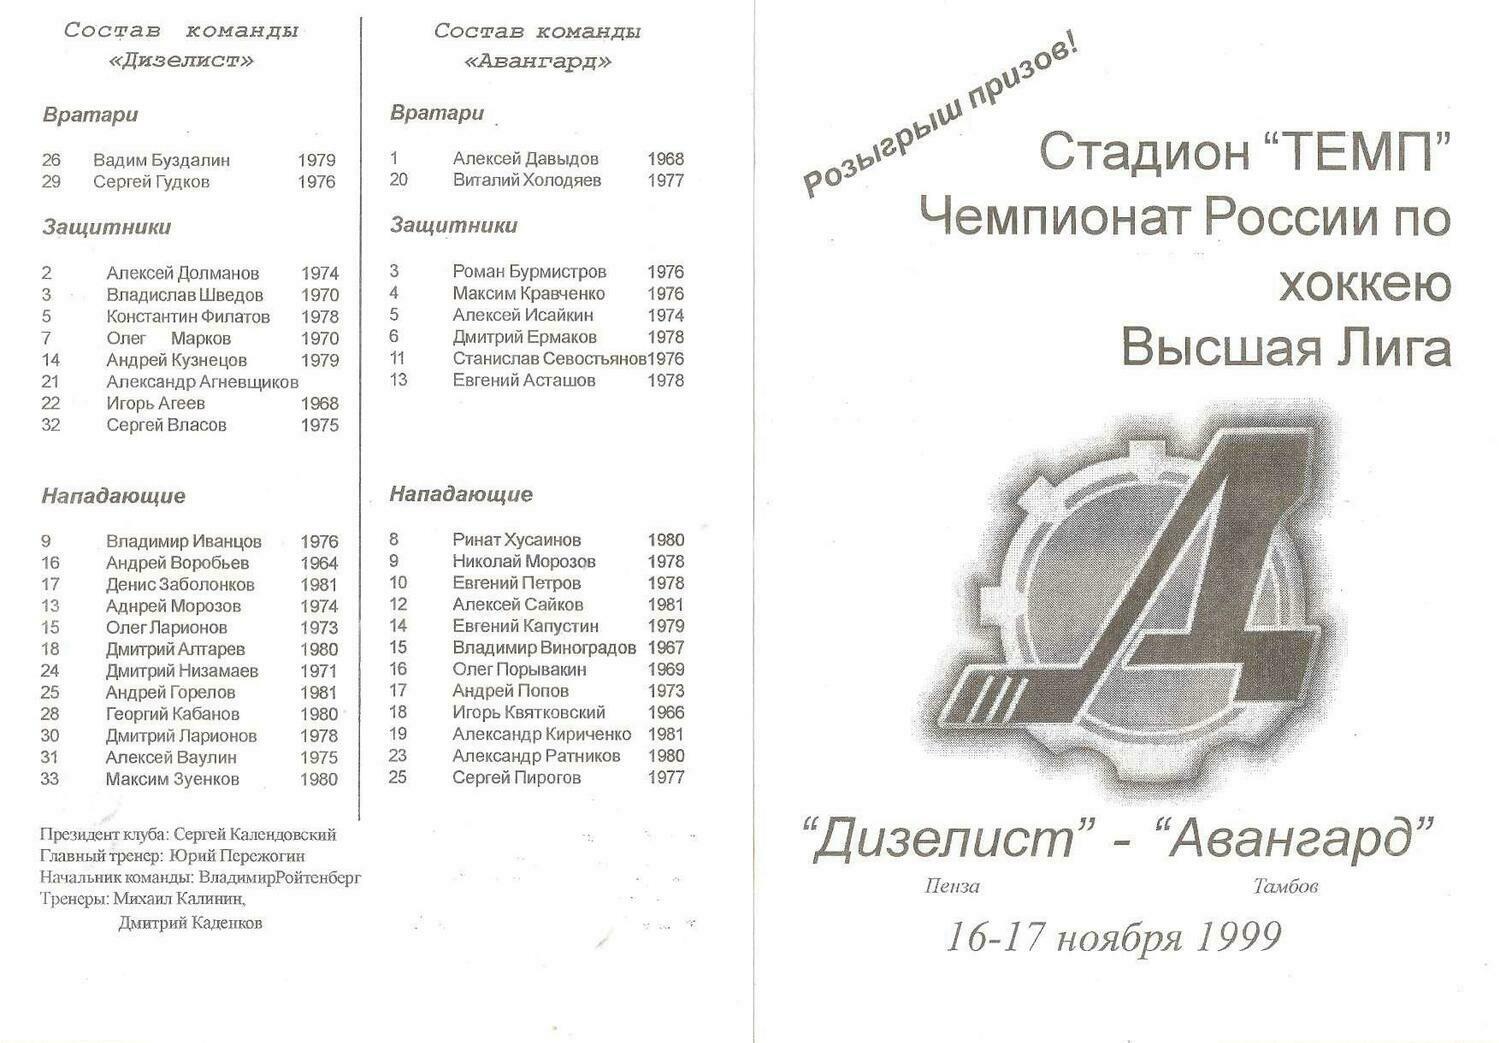 Программы "Дизелист" Пенза - "Авангард" Тамбов от 16-17.11.1999г.